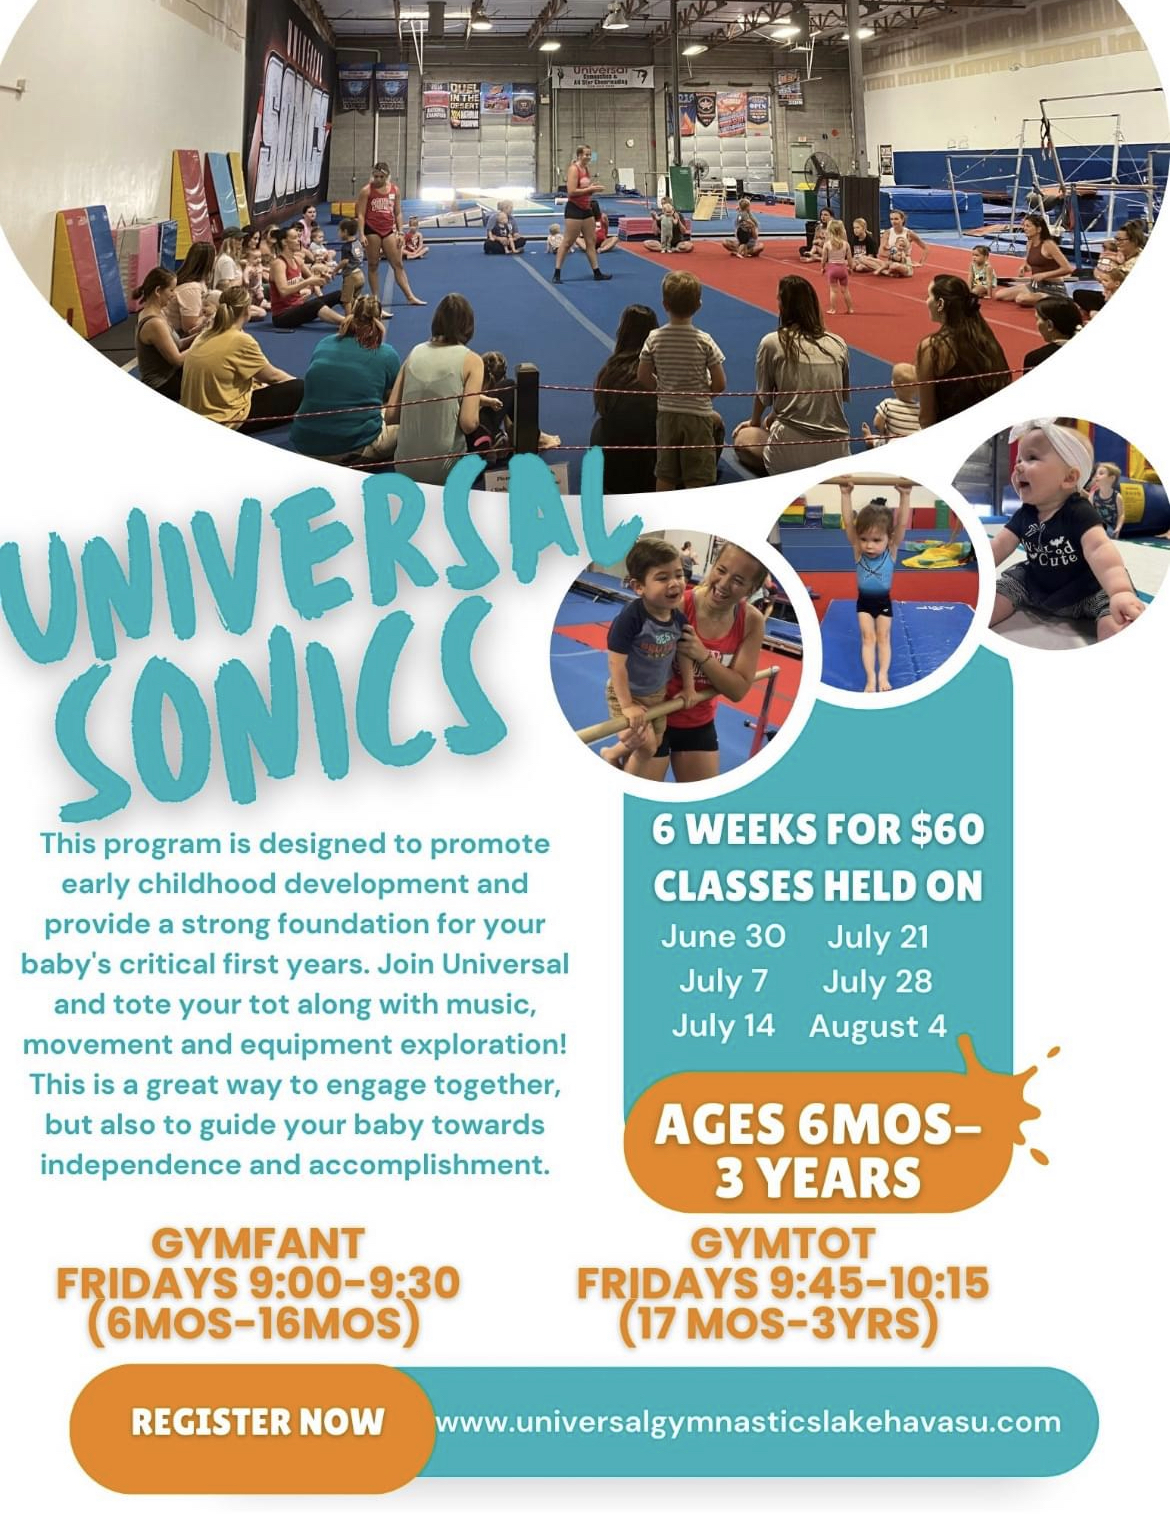 Universal Sonics Gymfants and Gymtots classes